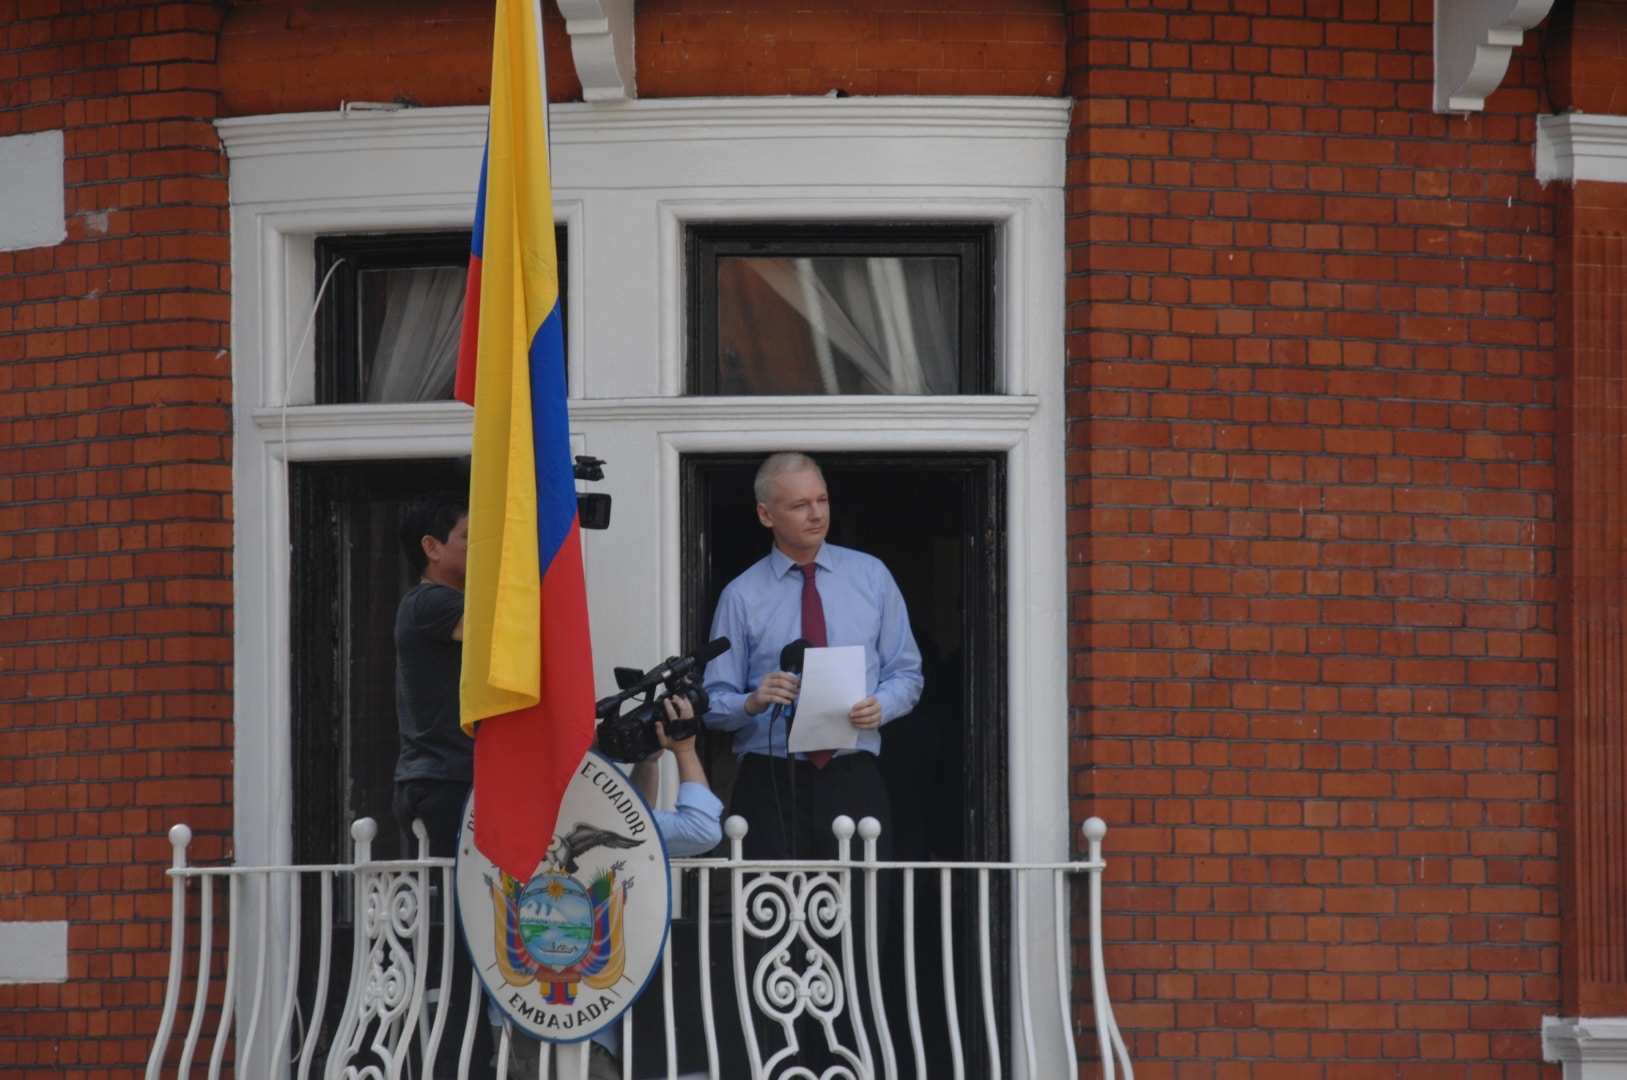 Julian Assange speaking from balcony of Ecuador embassy in London, December 2018. File photo.